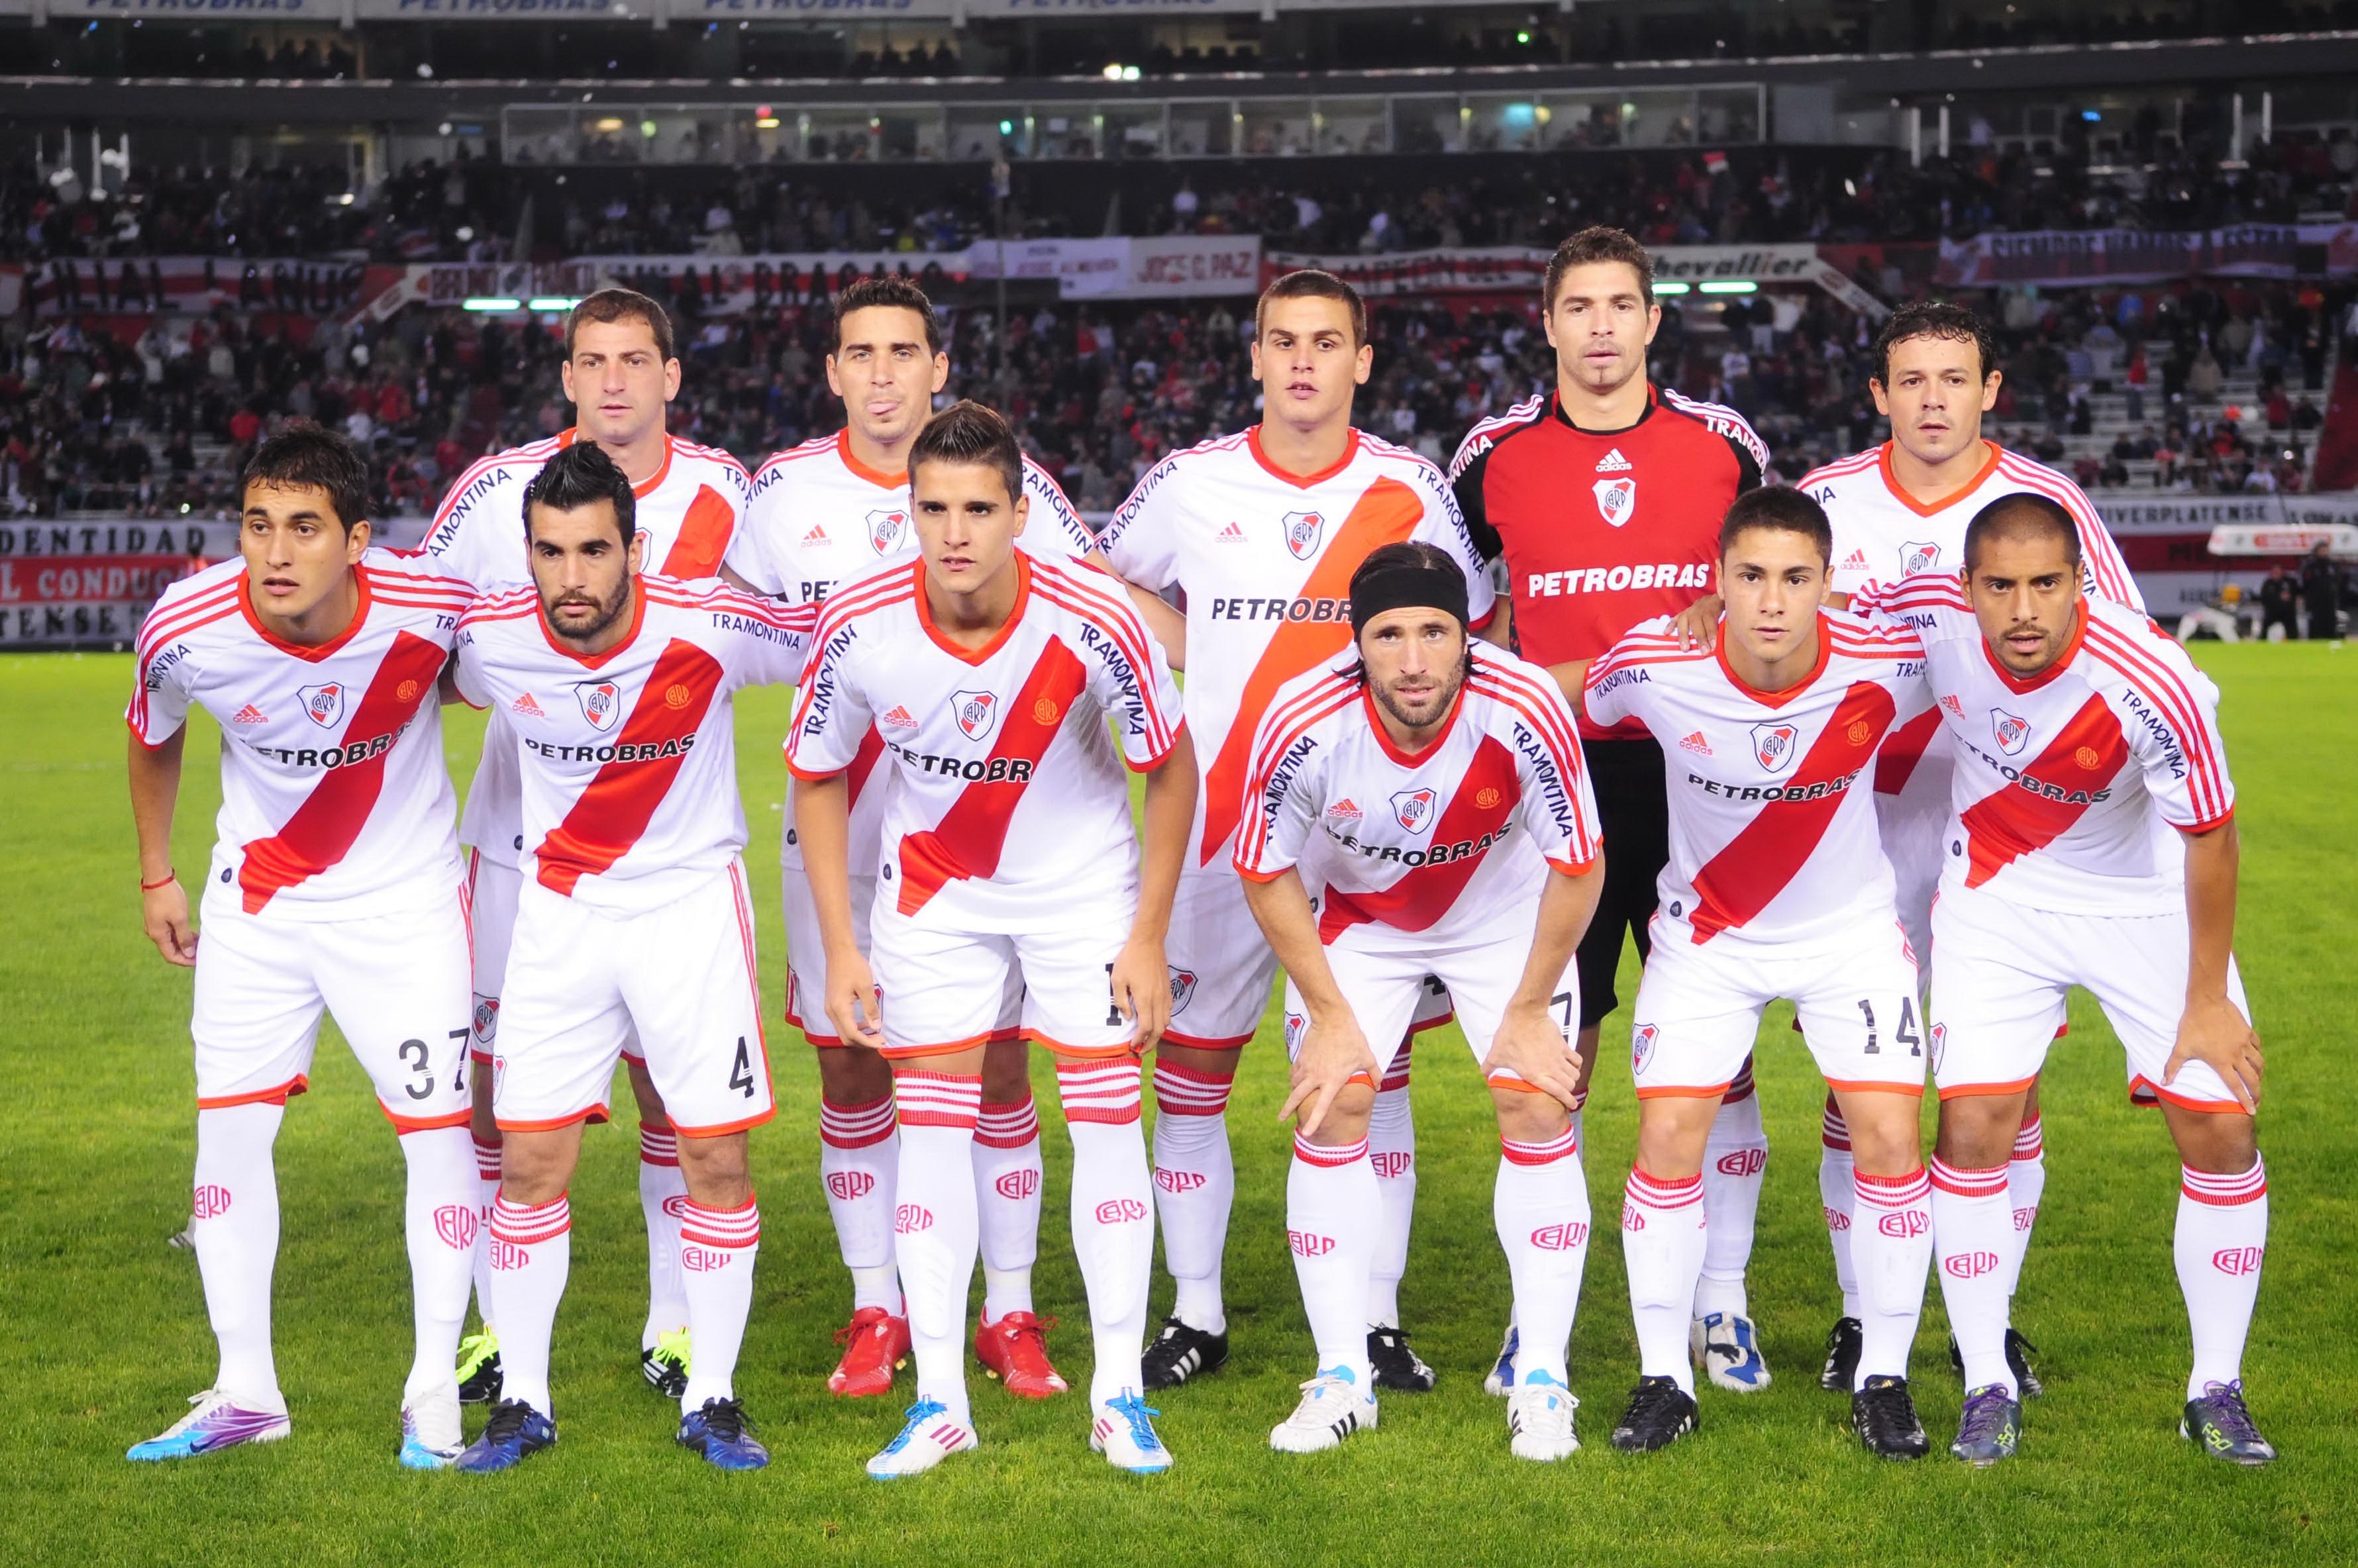 Club Atlético River Plate - Club Atlético River Plate